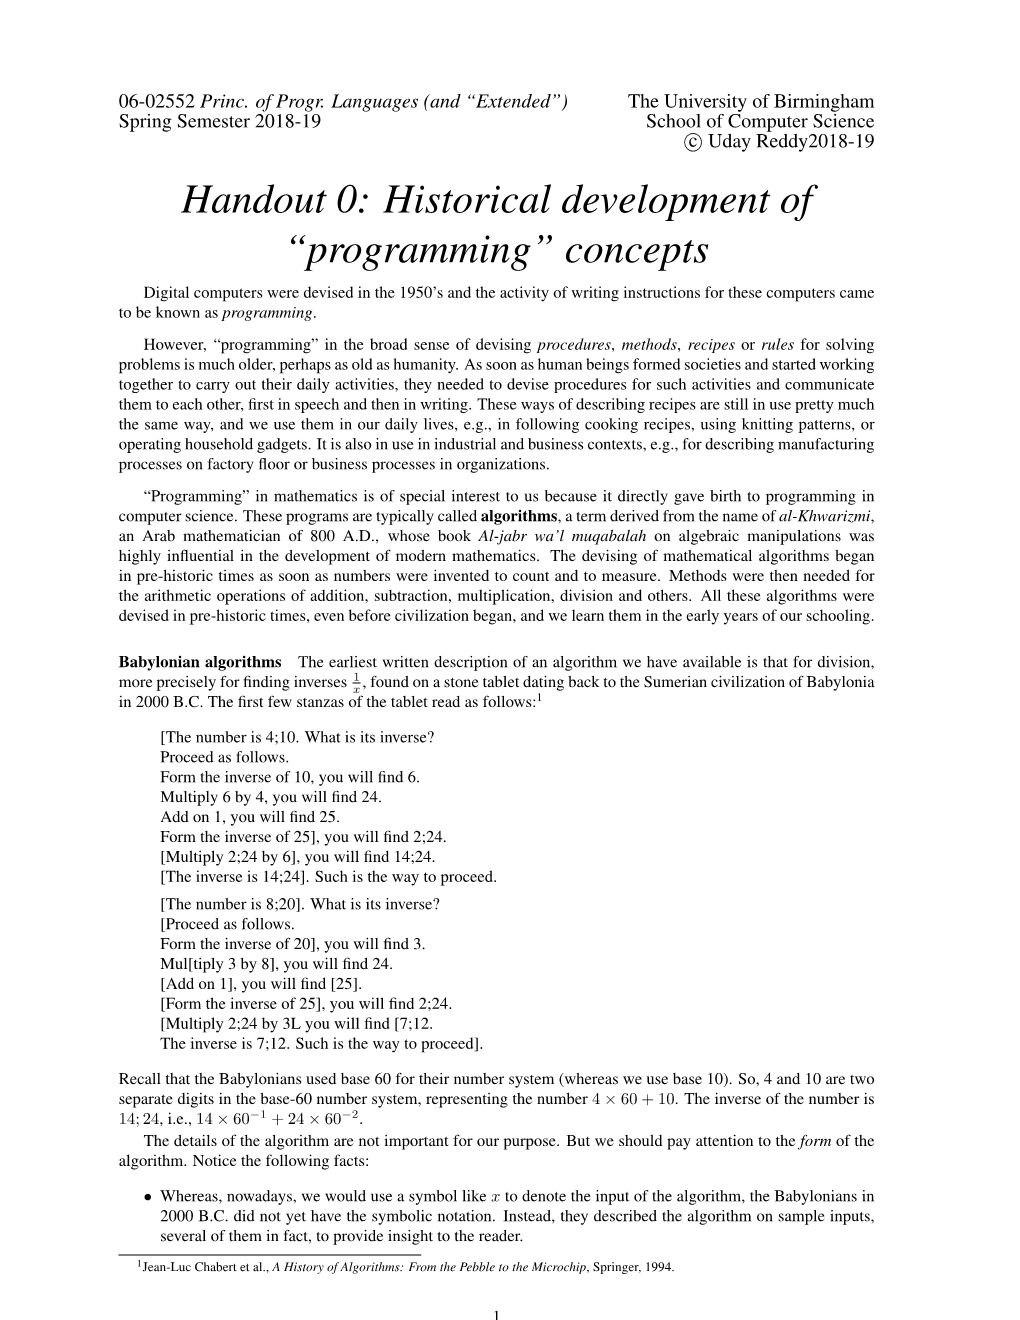 Handout 0: Historical Development of “Programming” Concepts